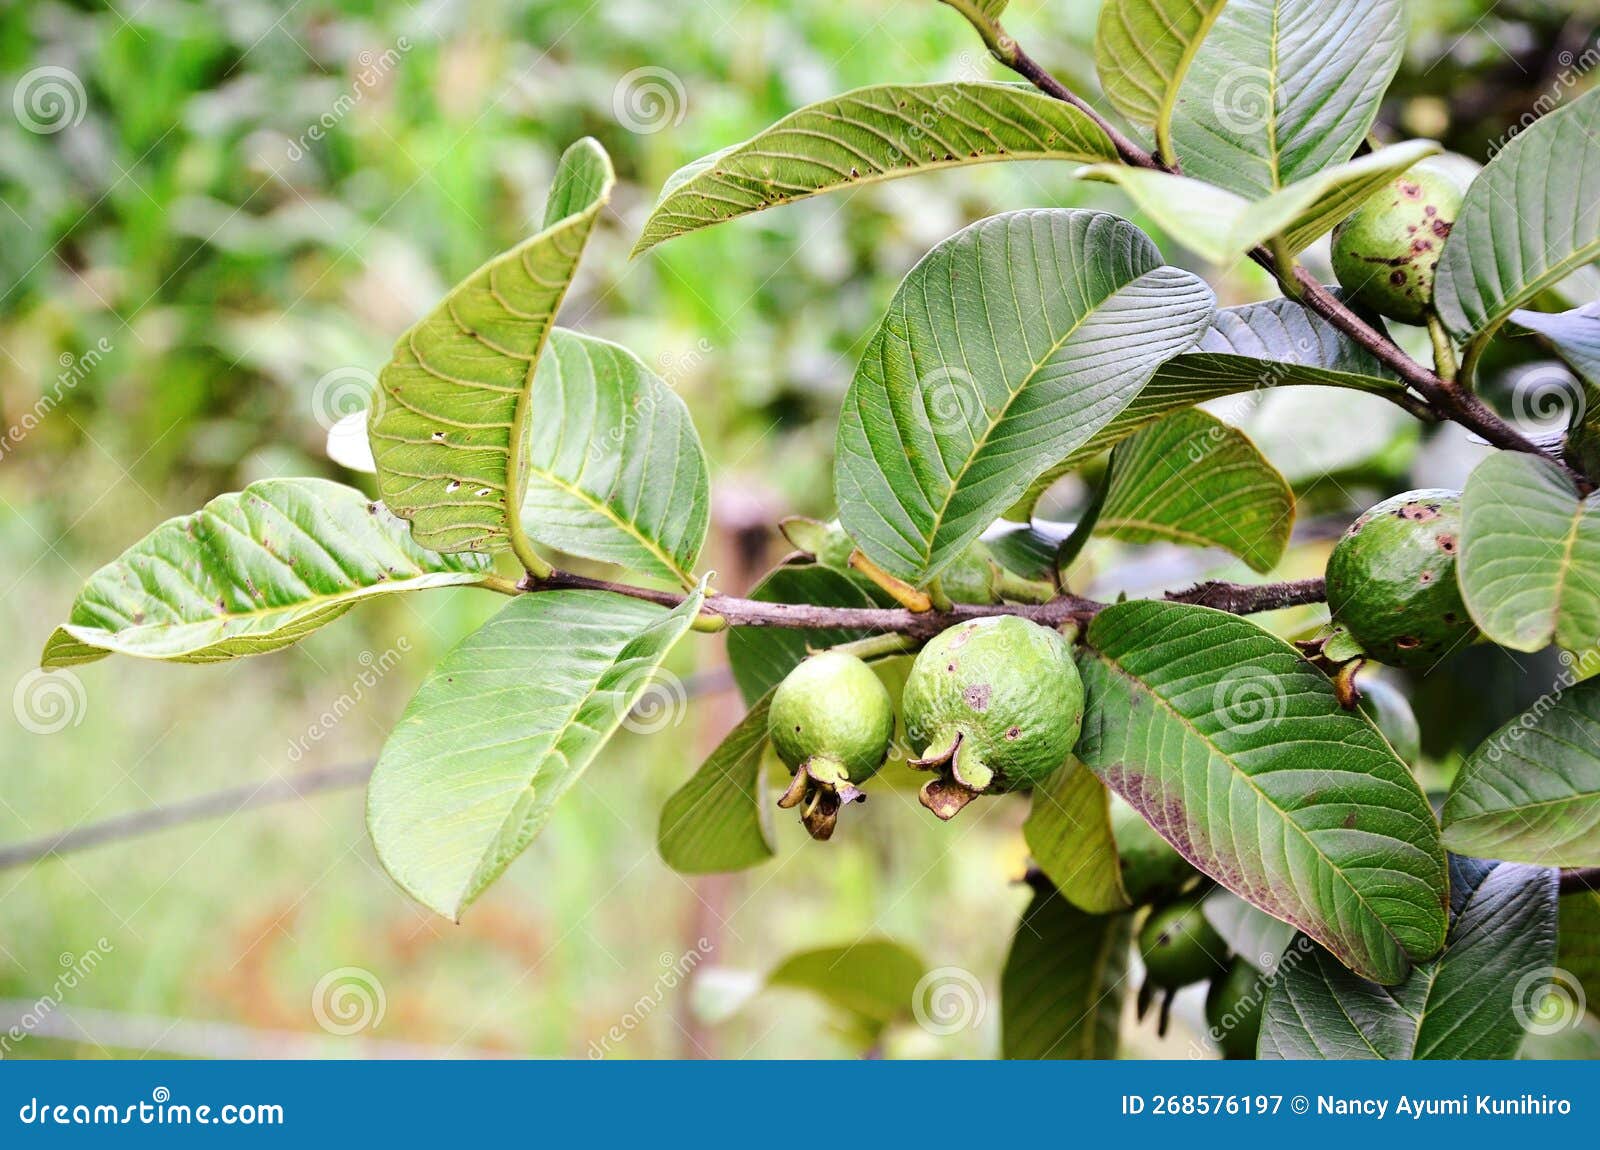 the fruits and leaves of psidium guajava